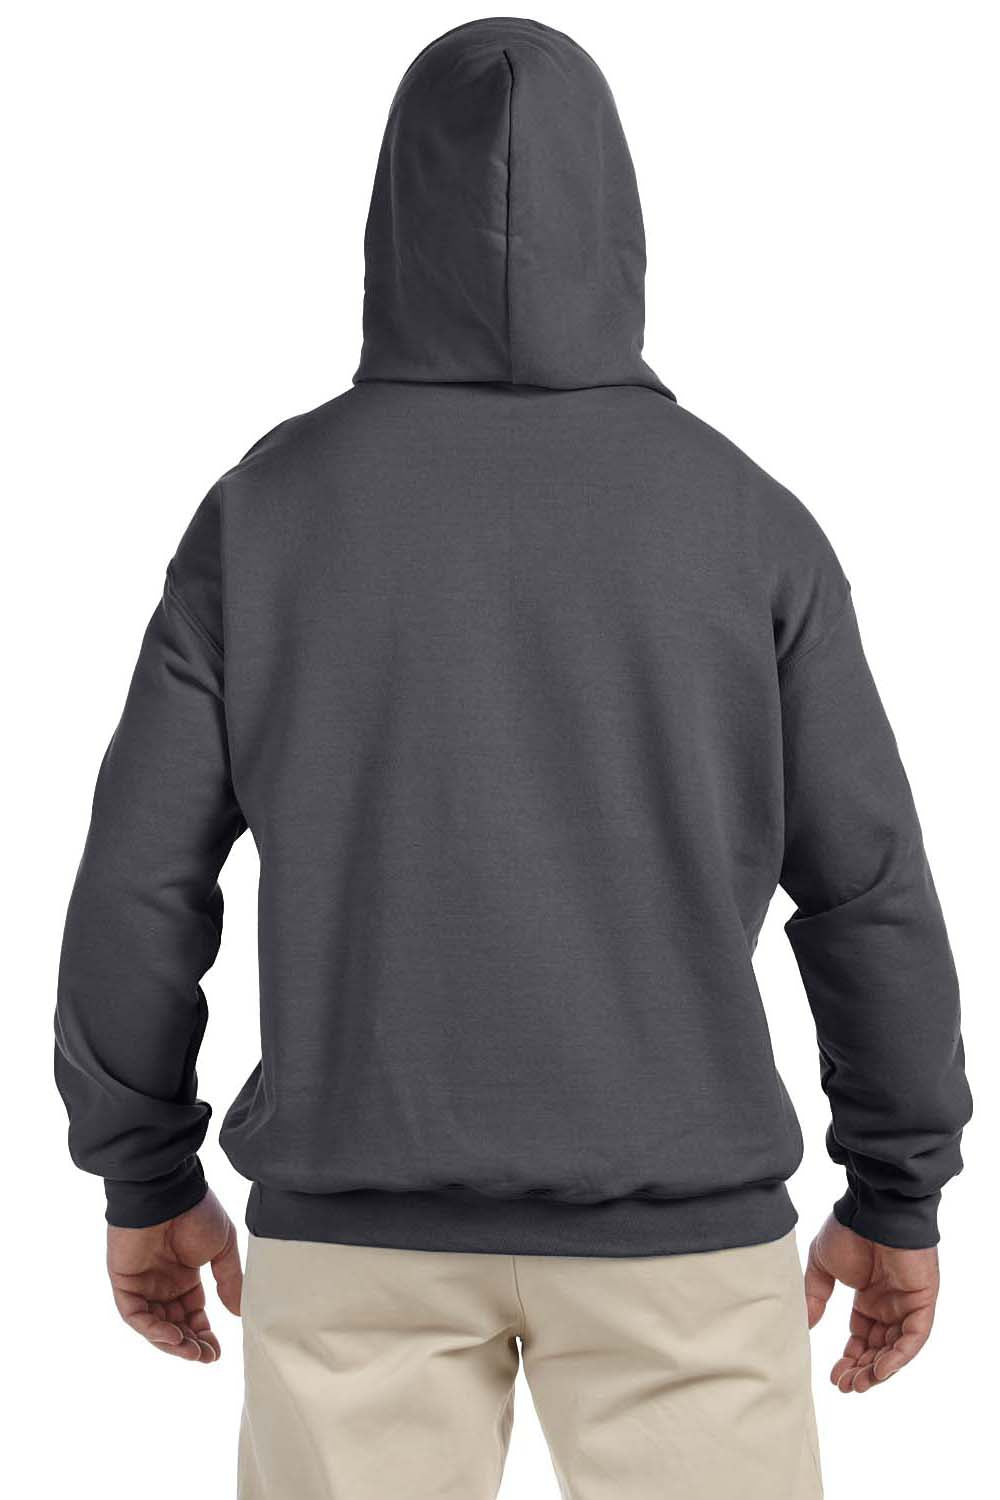 Gildan G125 Mens DryBlend Moisture Wicking Hooded Sweatshirt Hoodie Charcoal Grey Back